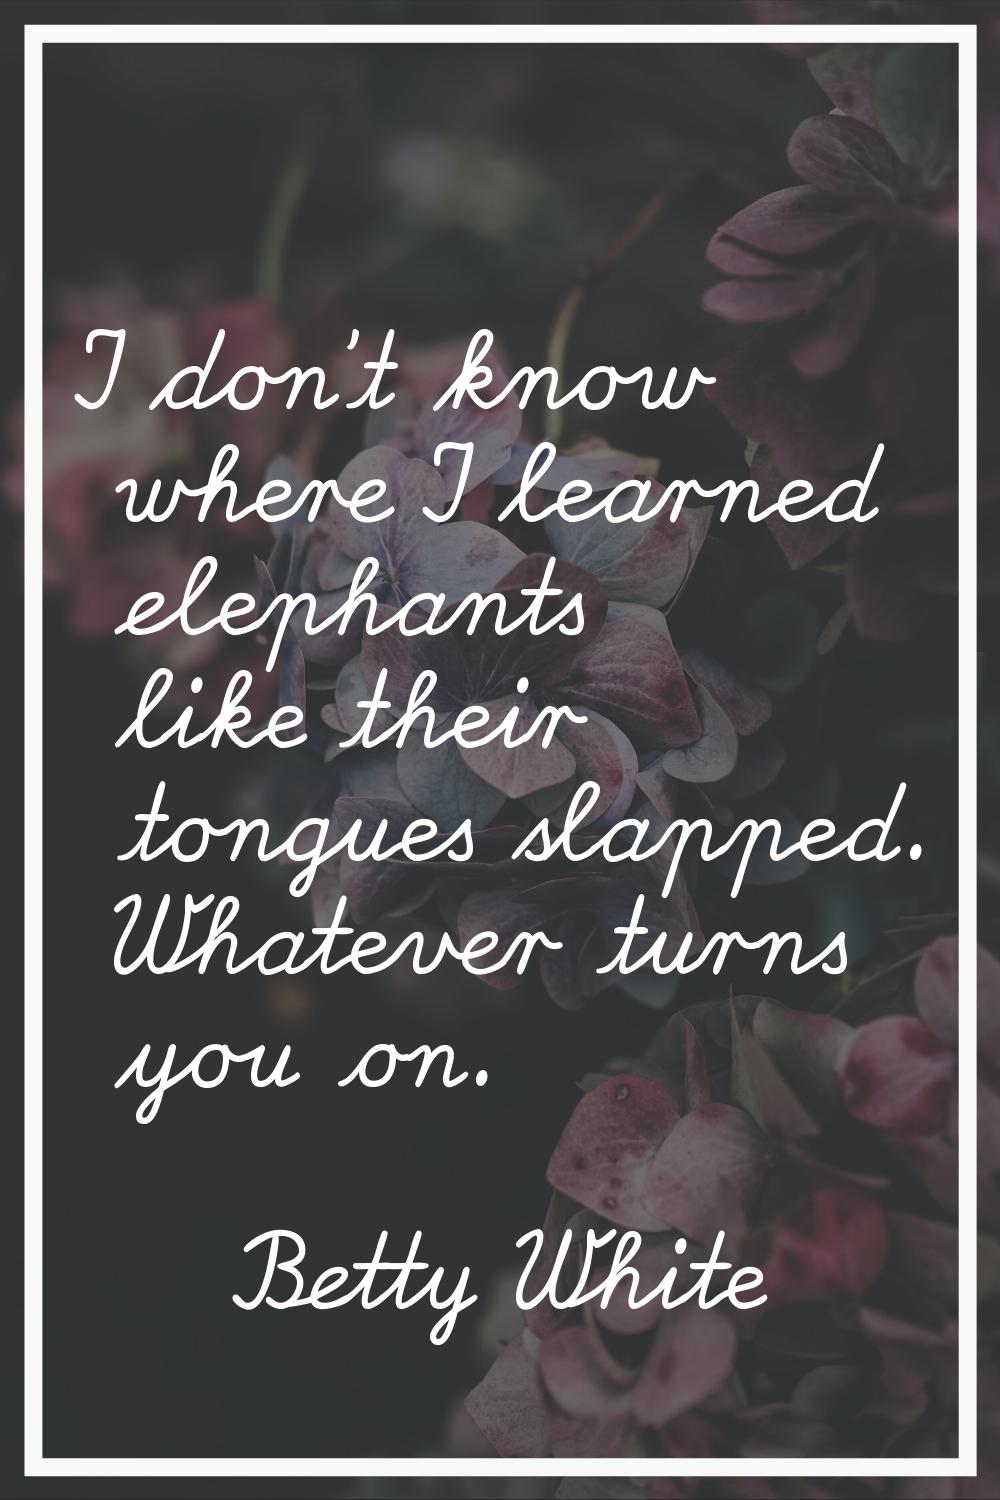 I don't know where I learned elephants like their tongues slapped. Whatever turns you on.